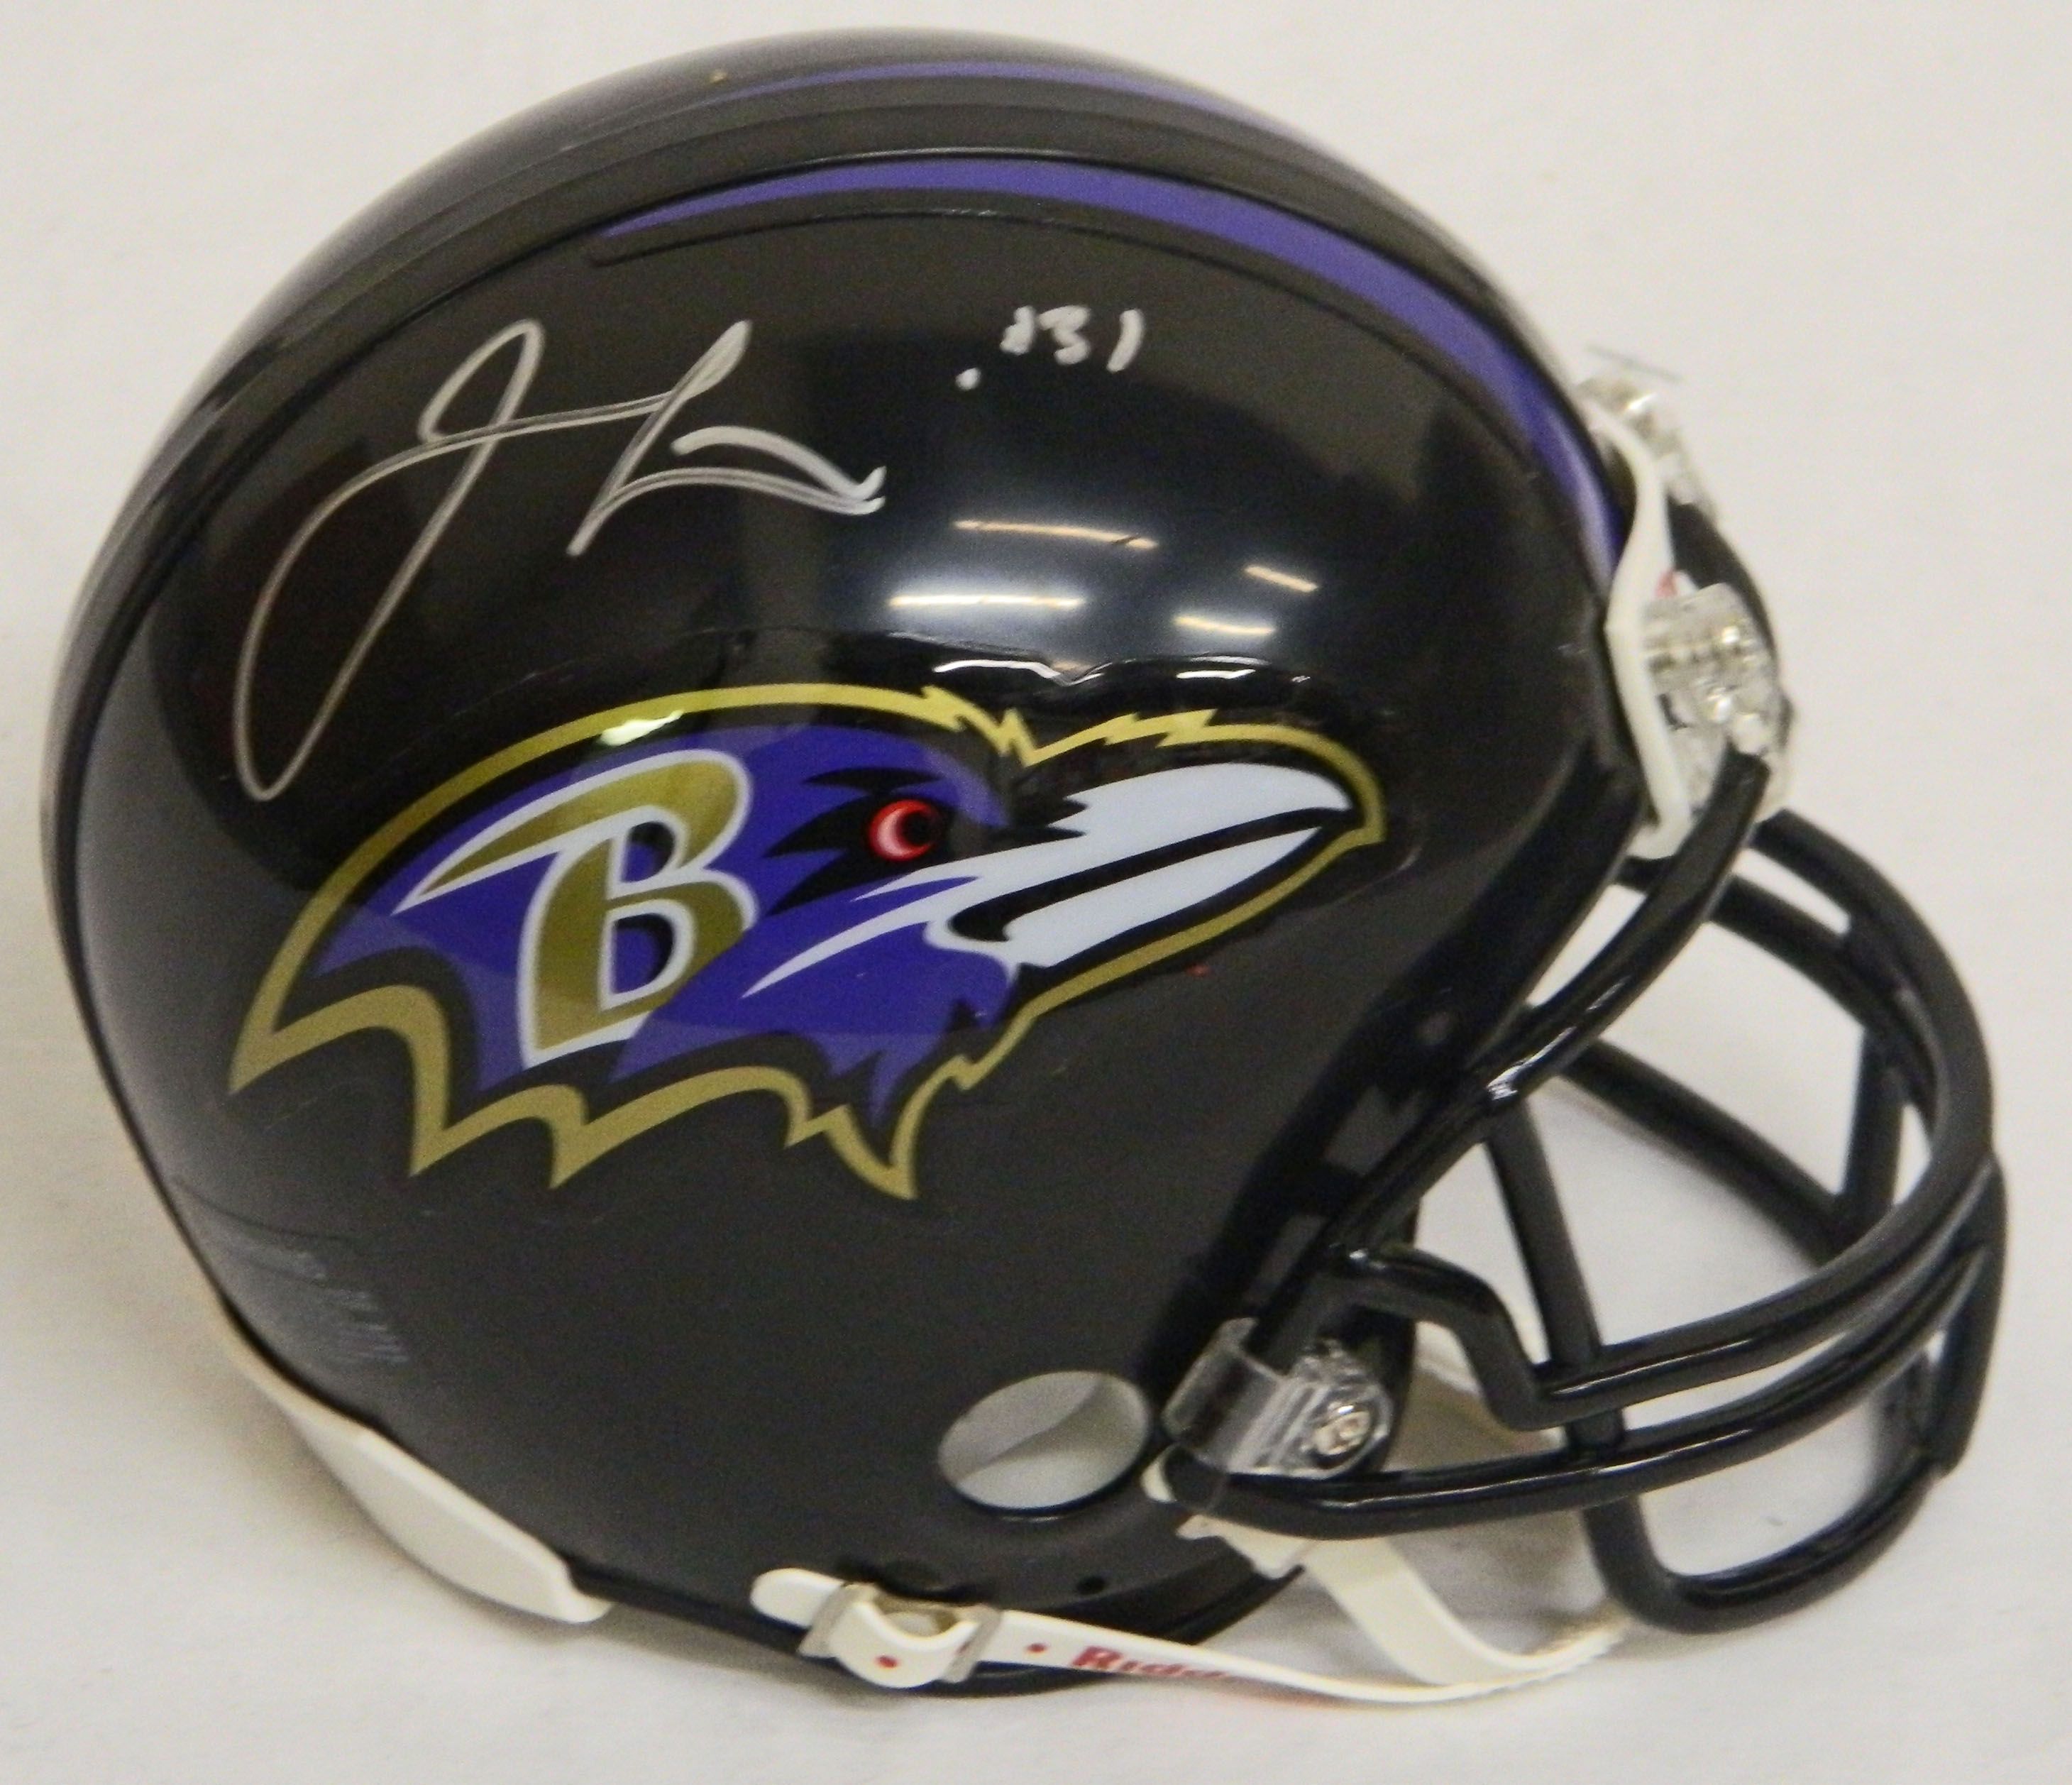 Jamal Lewis signed Baltimore Ravens Riddell replica mini helmet. Item